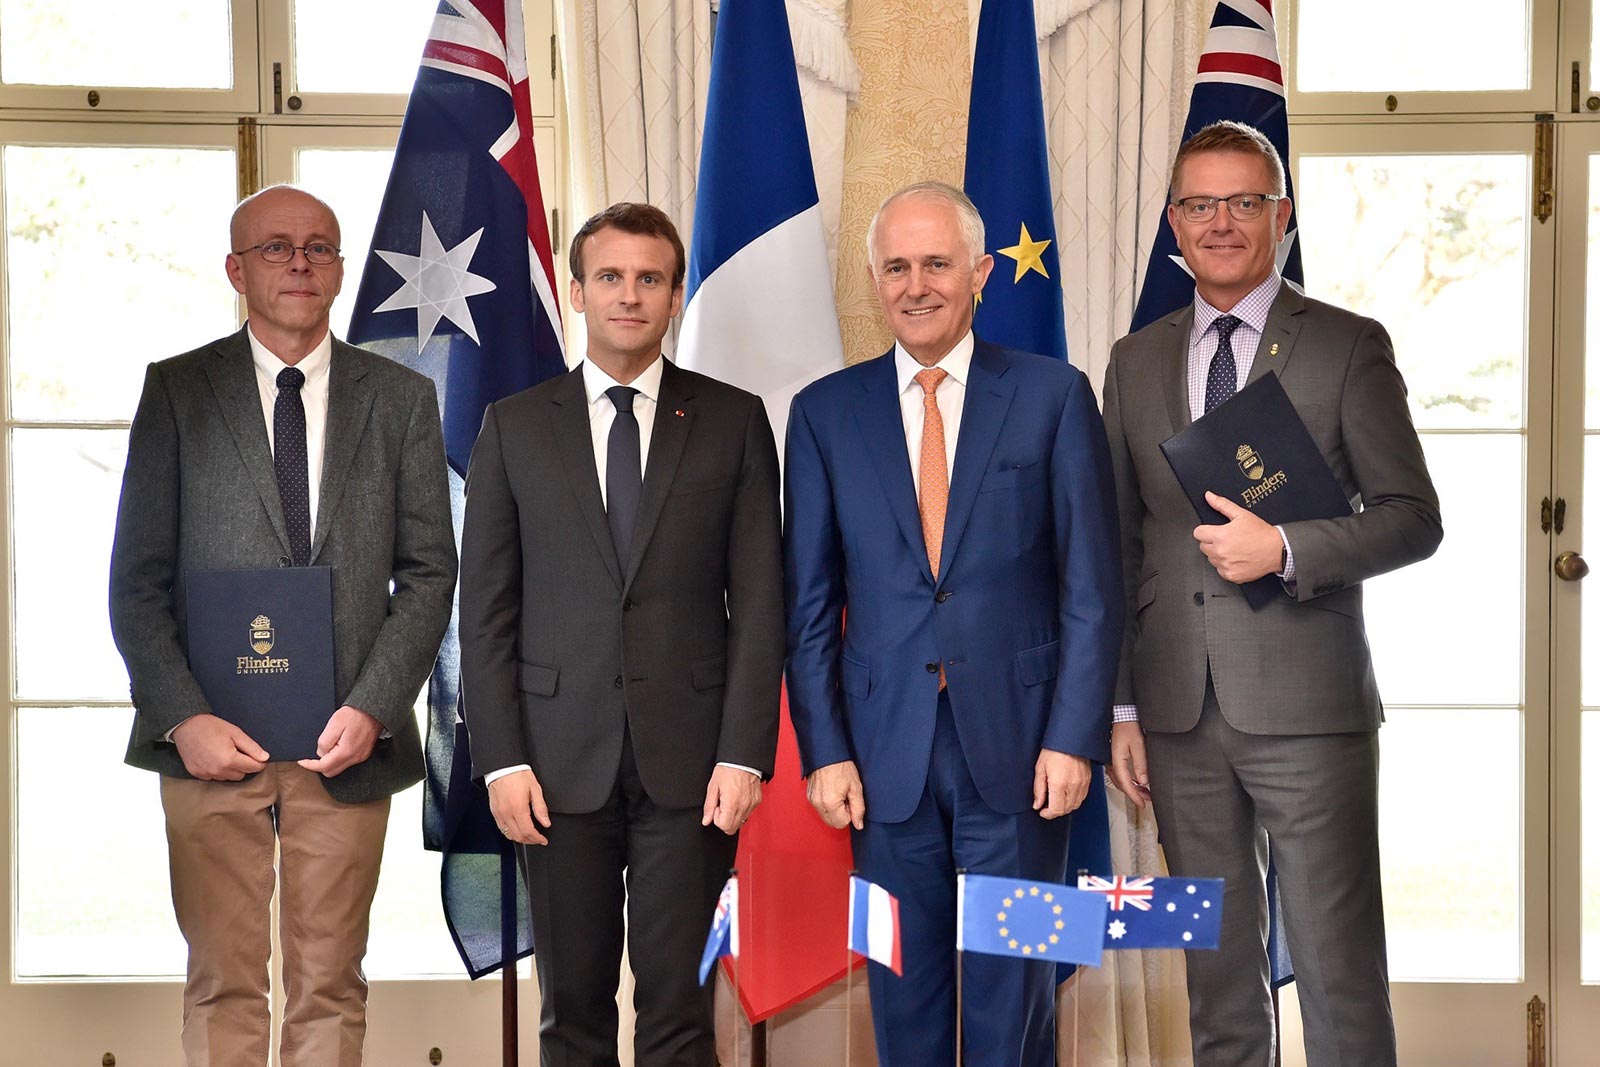 From left: Professor Arnaud Poitou, Director of Centrale Nantes; President of France Emmanuel Macron; Prime Minister of Australia Malcolm Turnbull; Professor Colin Stirling, President and Vice-Chancellor Flinders University.